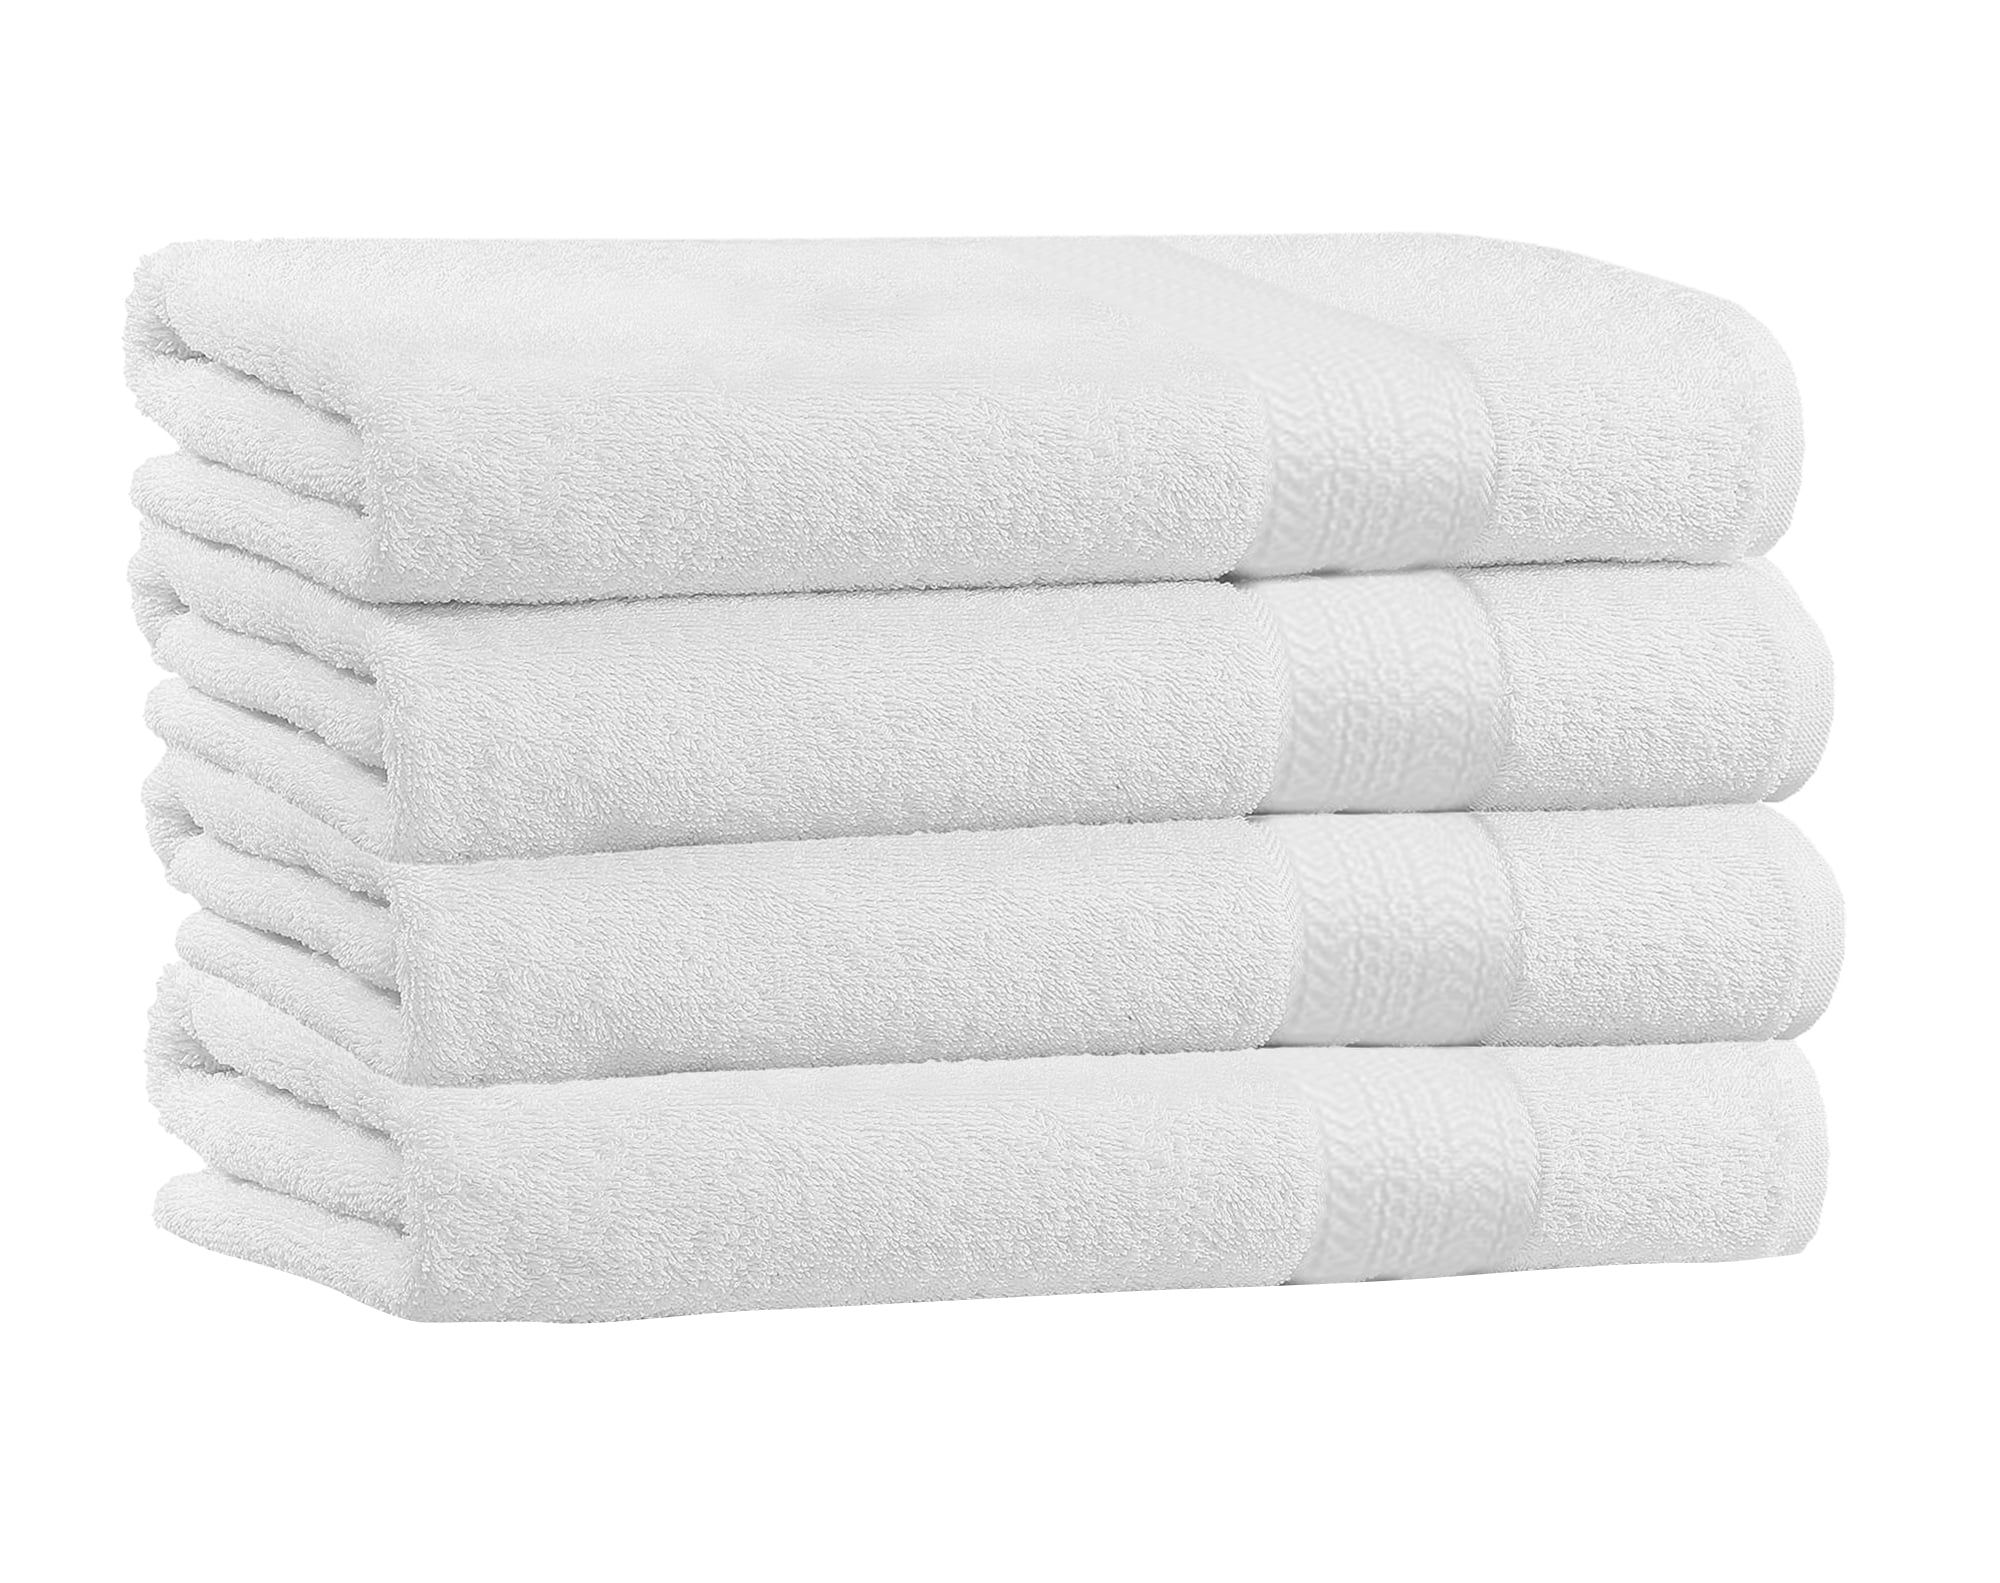 4 pack white premium 100% cotton hotel bath towel plush 27x50 14# dozen pegasus 